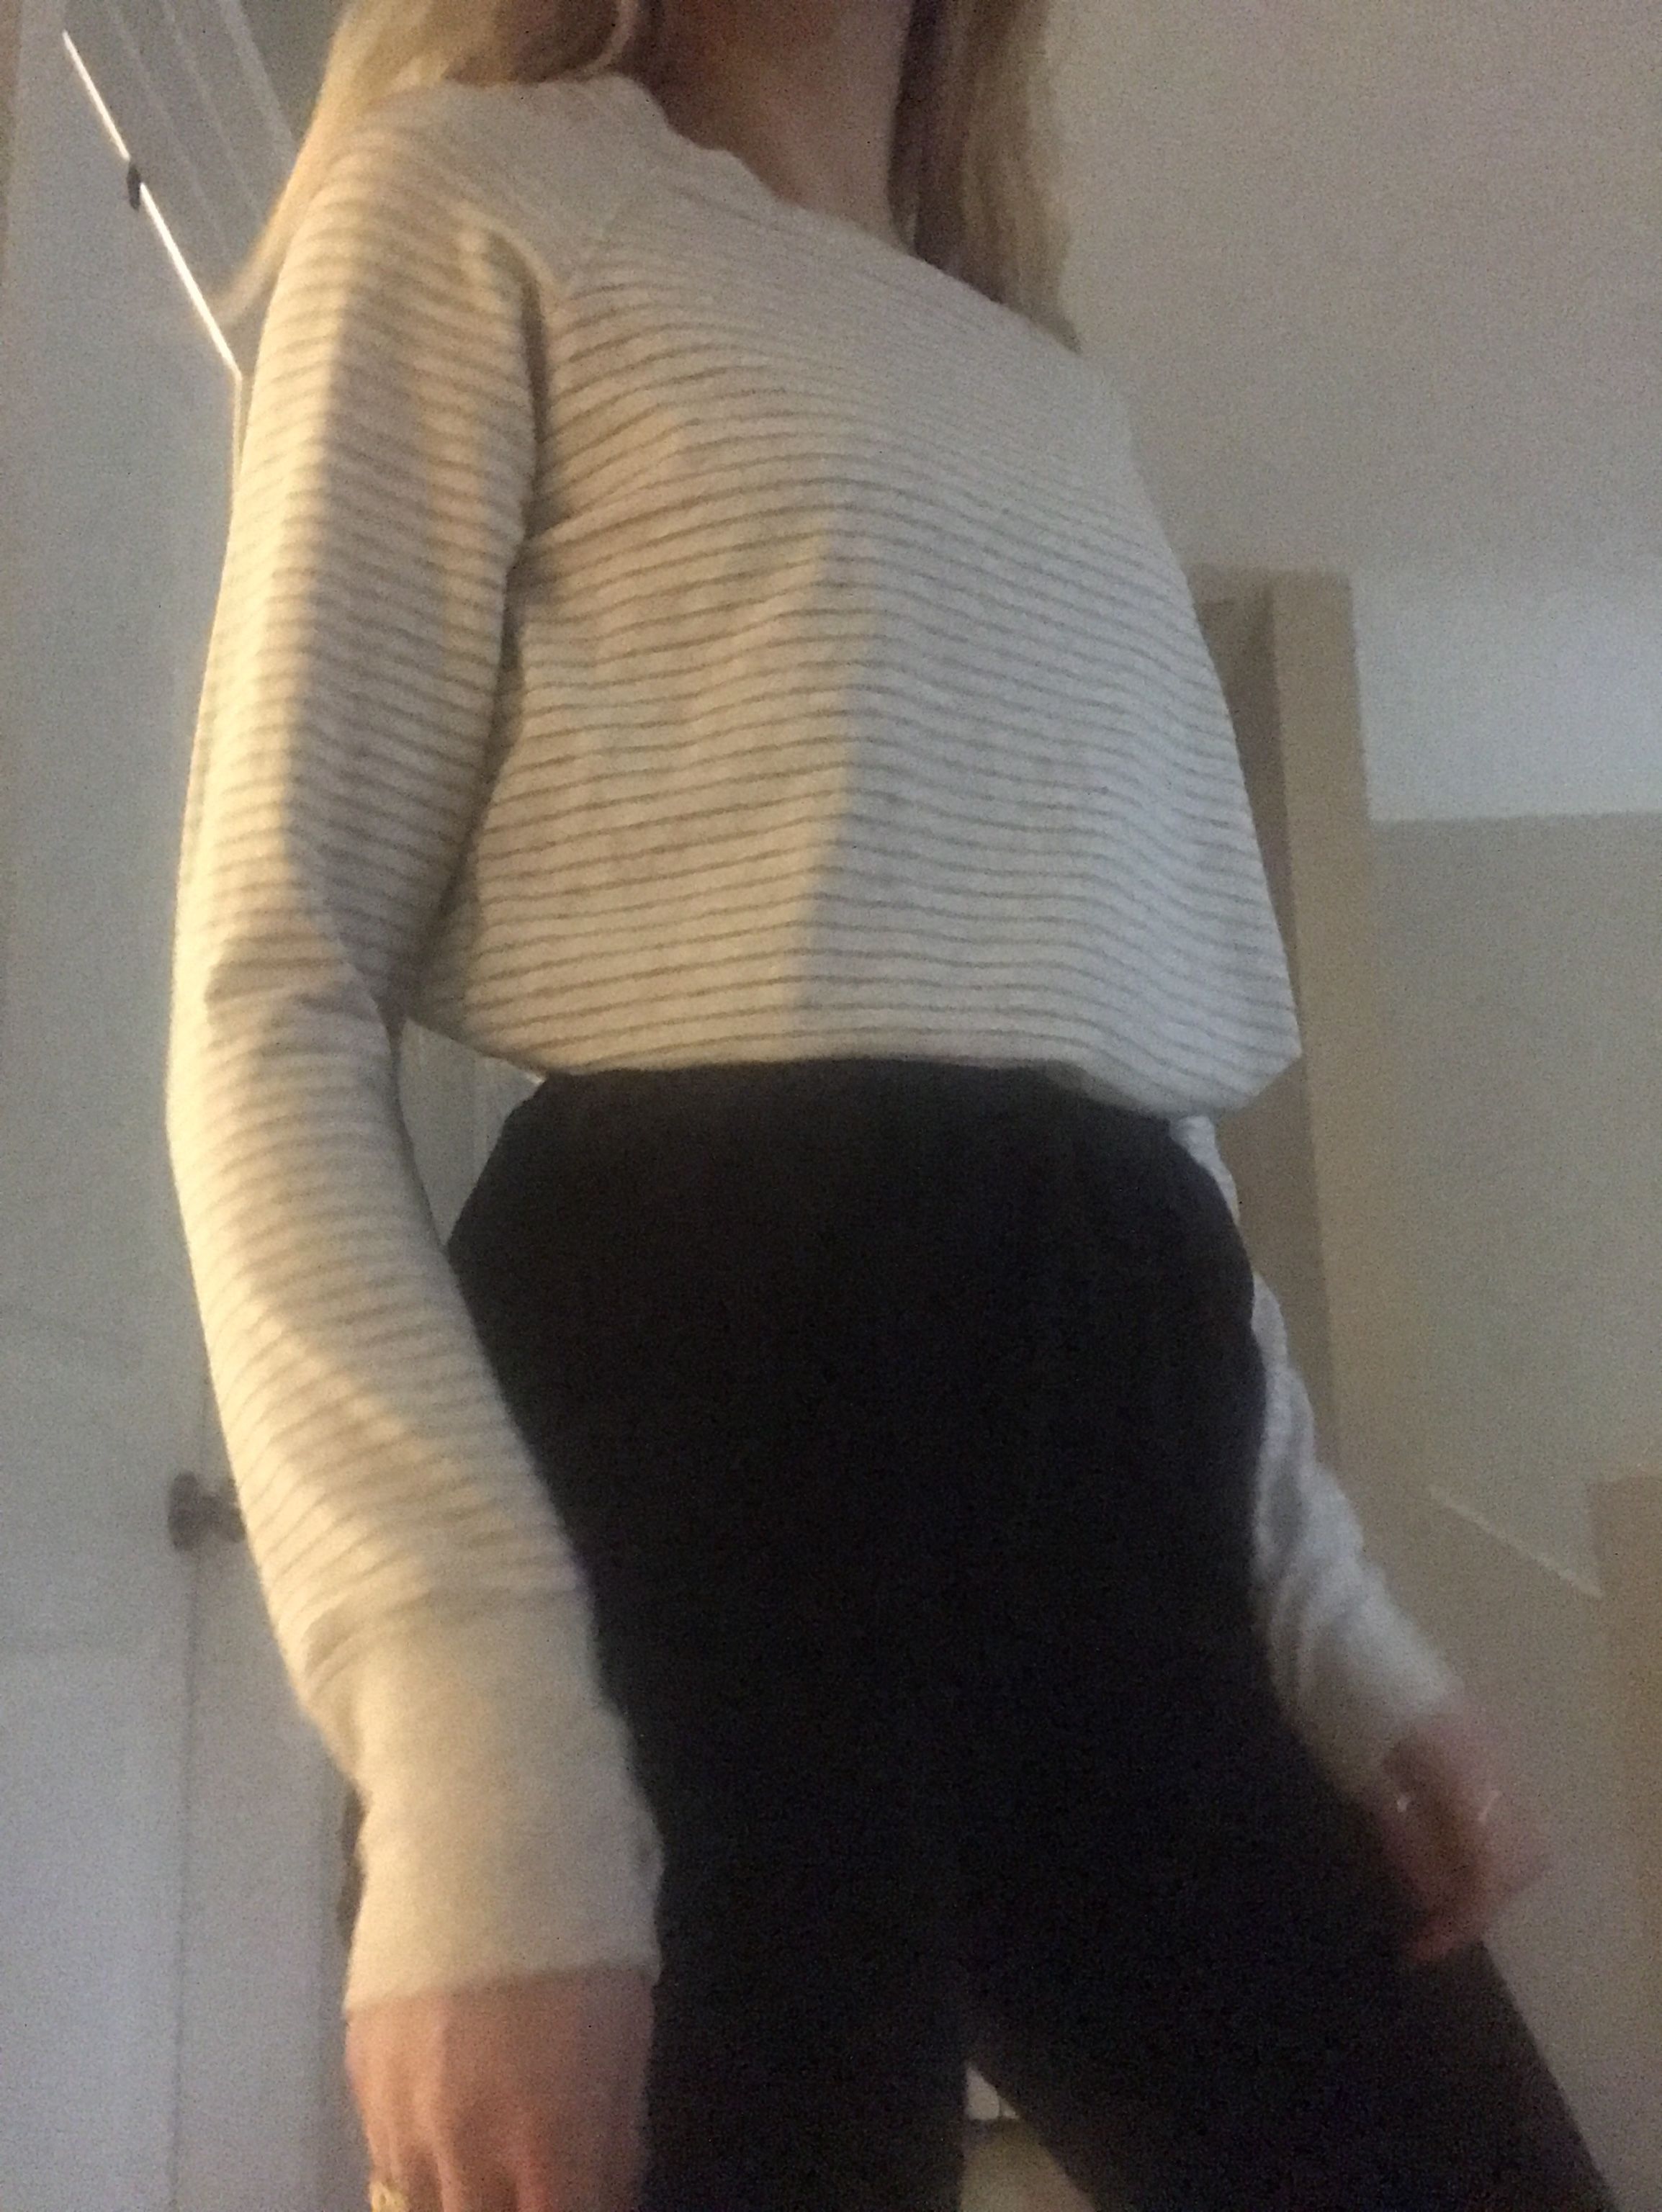 DANSKIN Size Medium Grey and White Striped Sweater